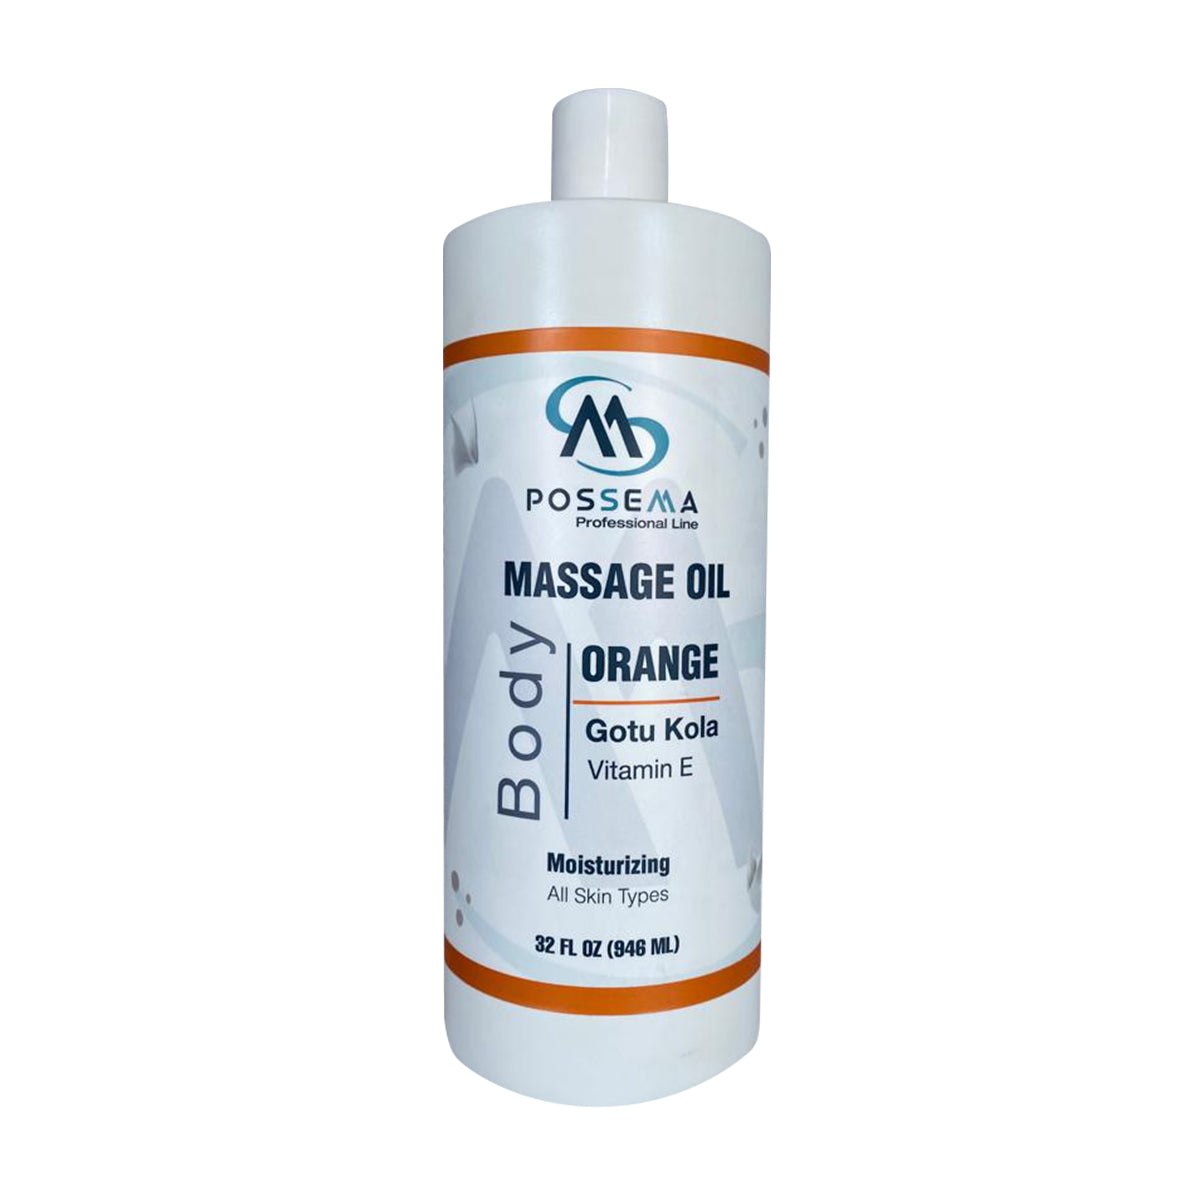 COSIMED huile de massage professionnelle orange 500 ml